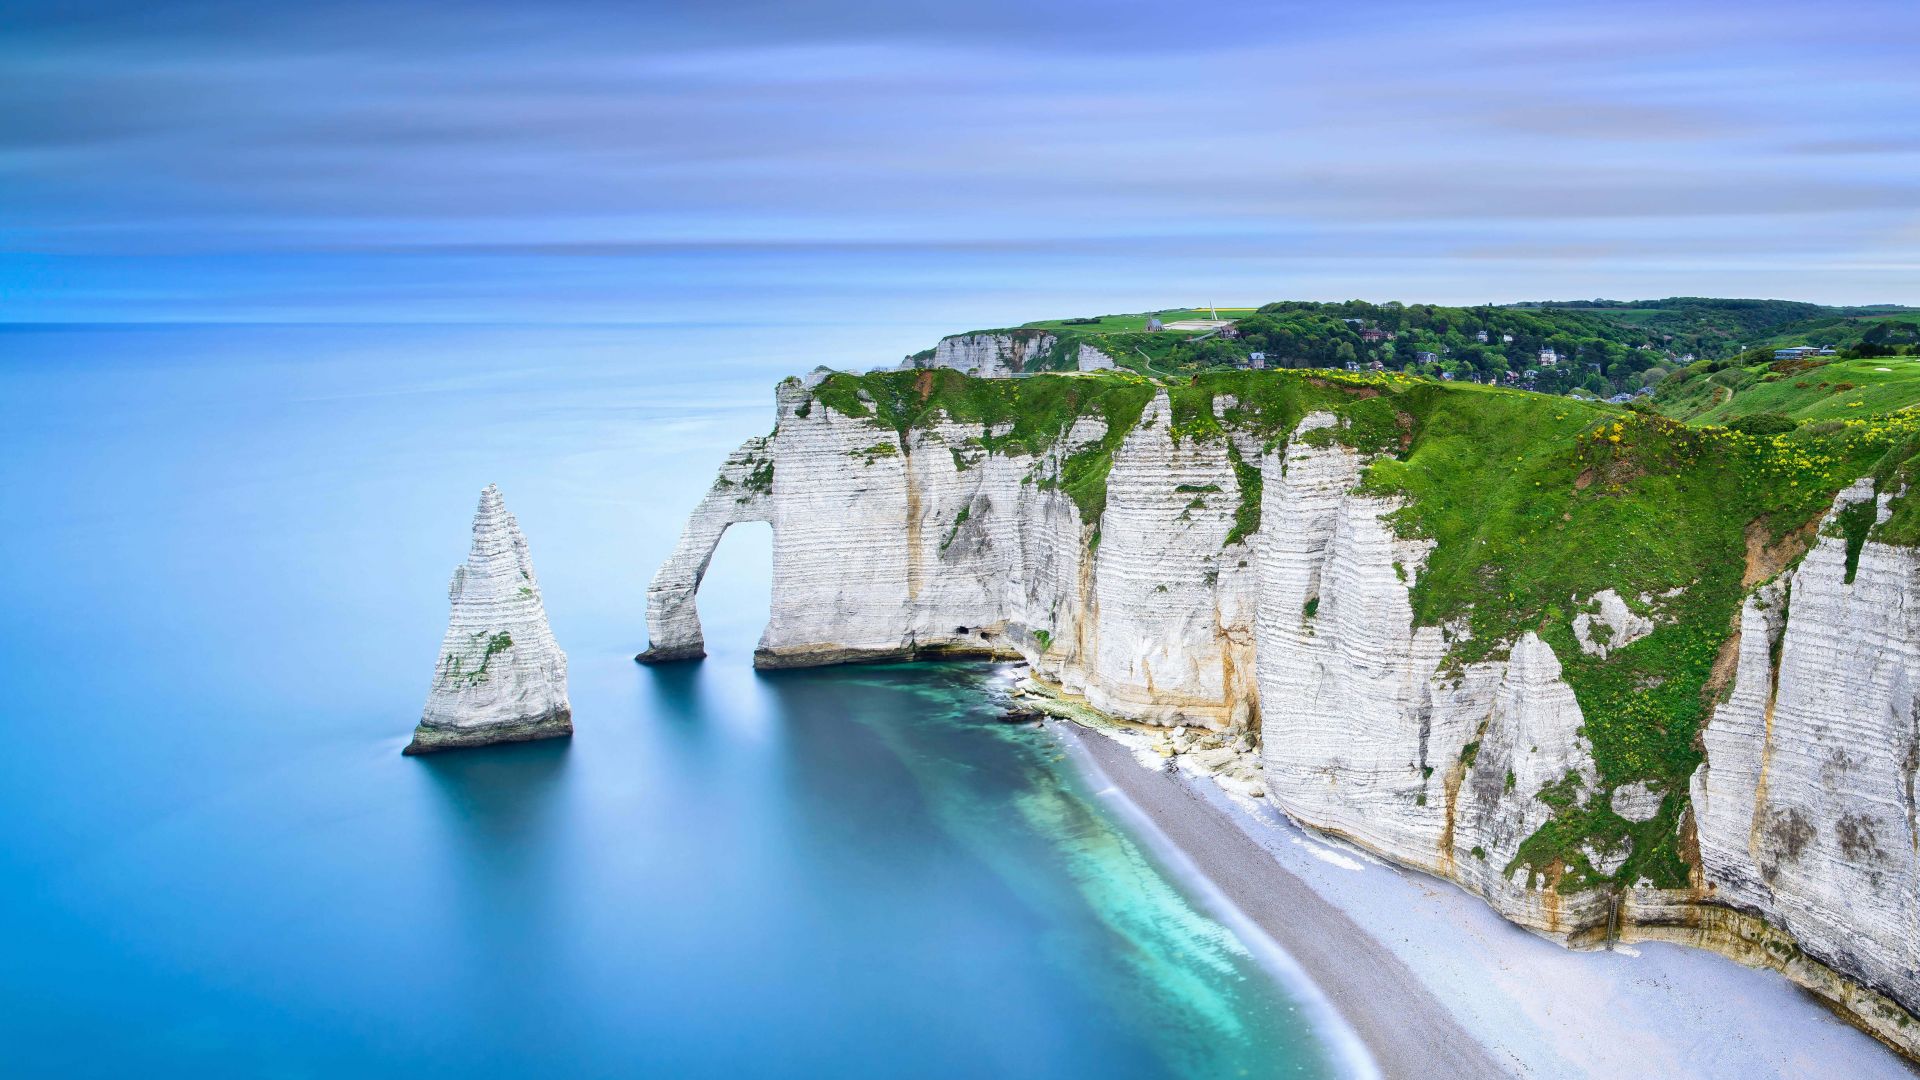 Нормандия, Франция, пляж, горы, скалы, океан, вода, Chemin des Douaniers, Normandy, France, beach, rocks, ocean, water, mountains, 4K (horizontal)